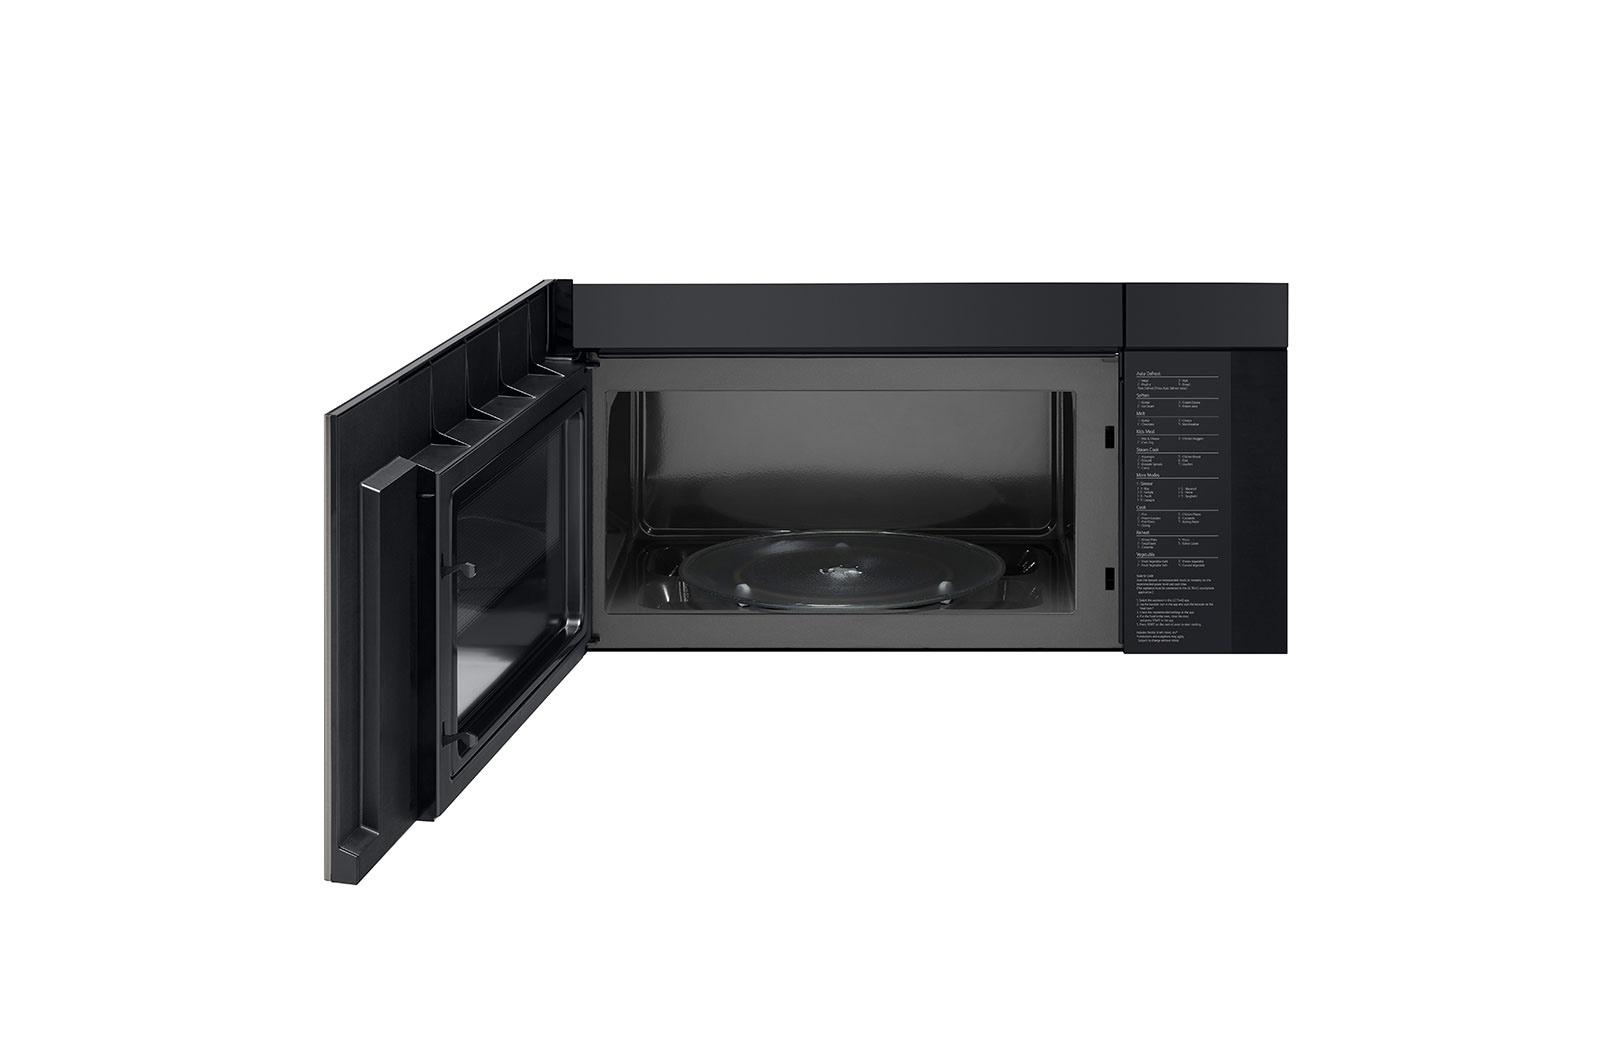 Lg 2.0 cu. ft. Smart Over-the-Range Microwave